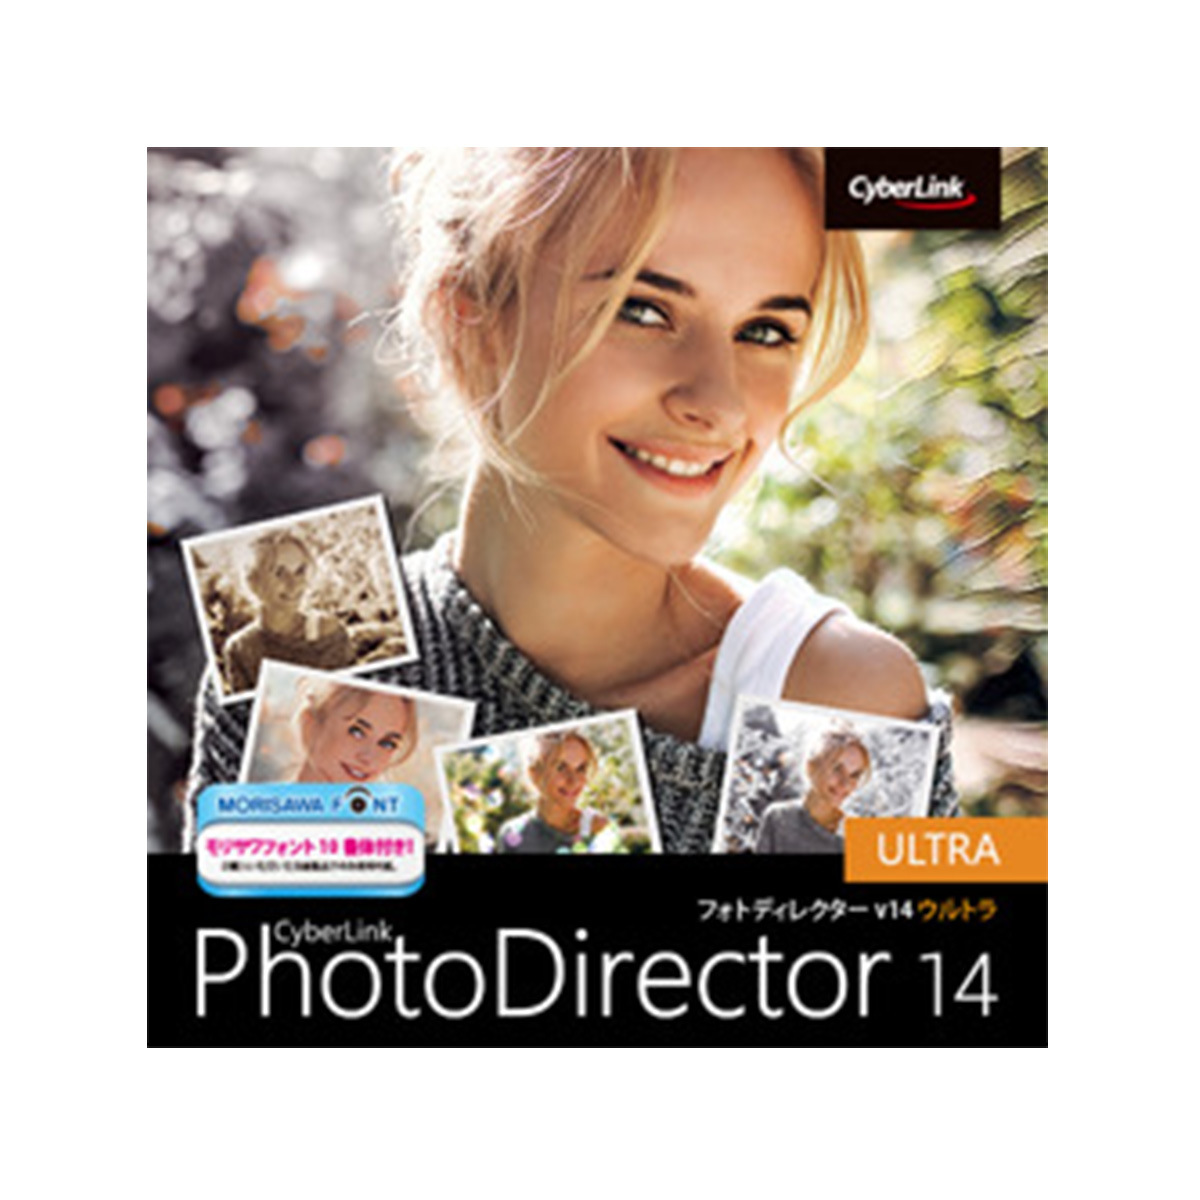 PhotoDirector 14 Ultra ダウンロード版